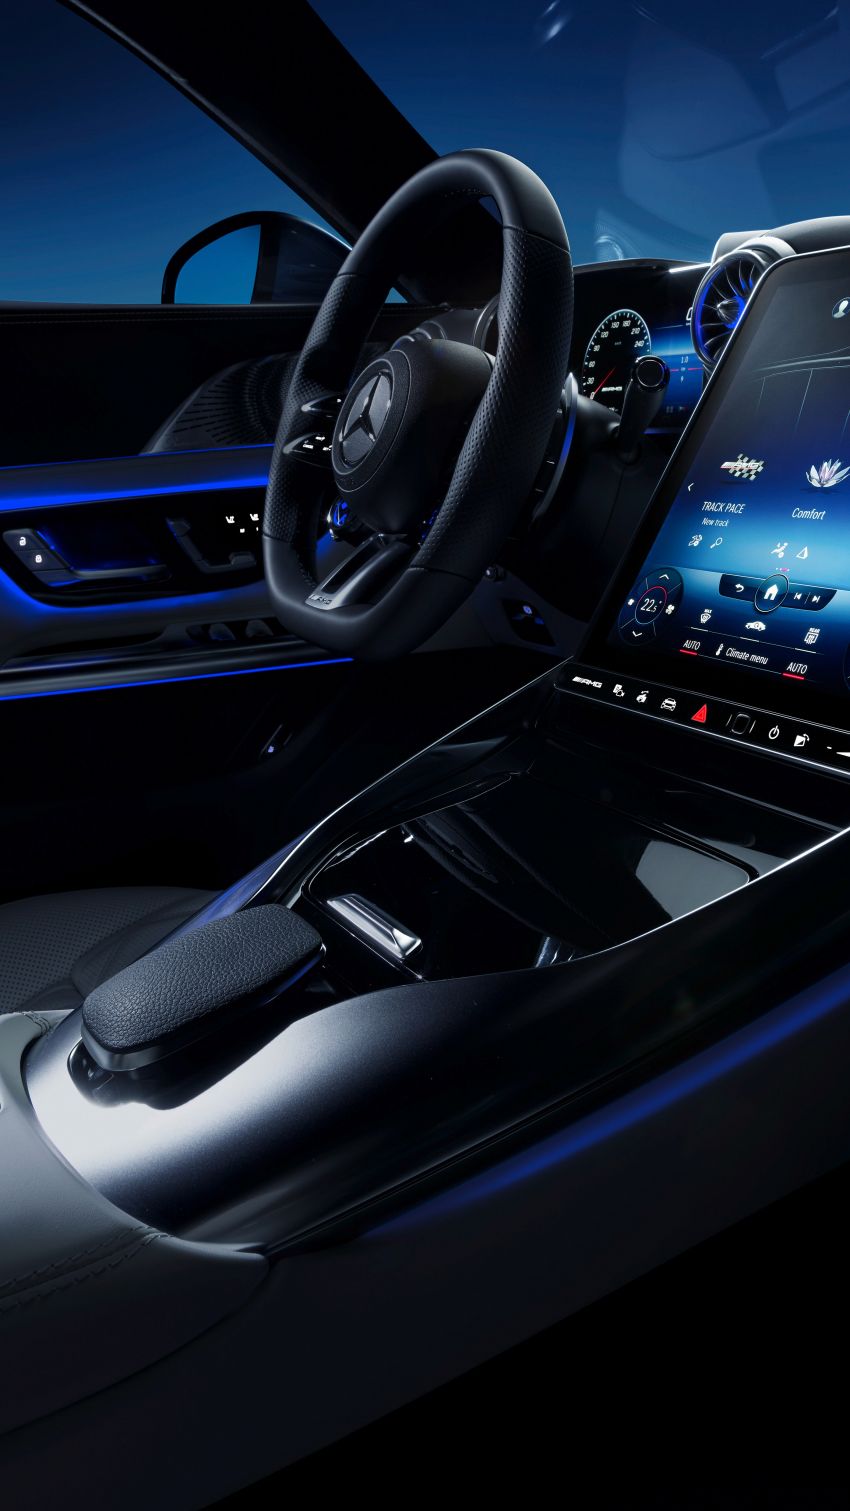 2022 R232 Mercedes-AMG SL interior gets revealed 1318895